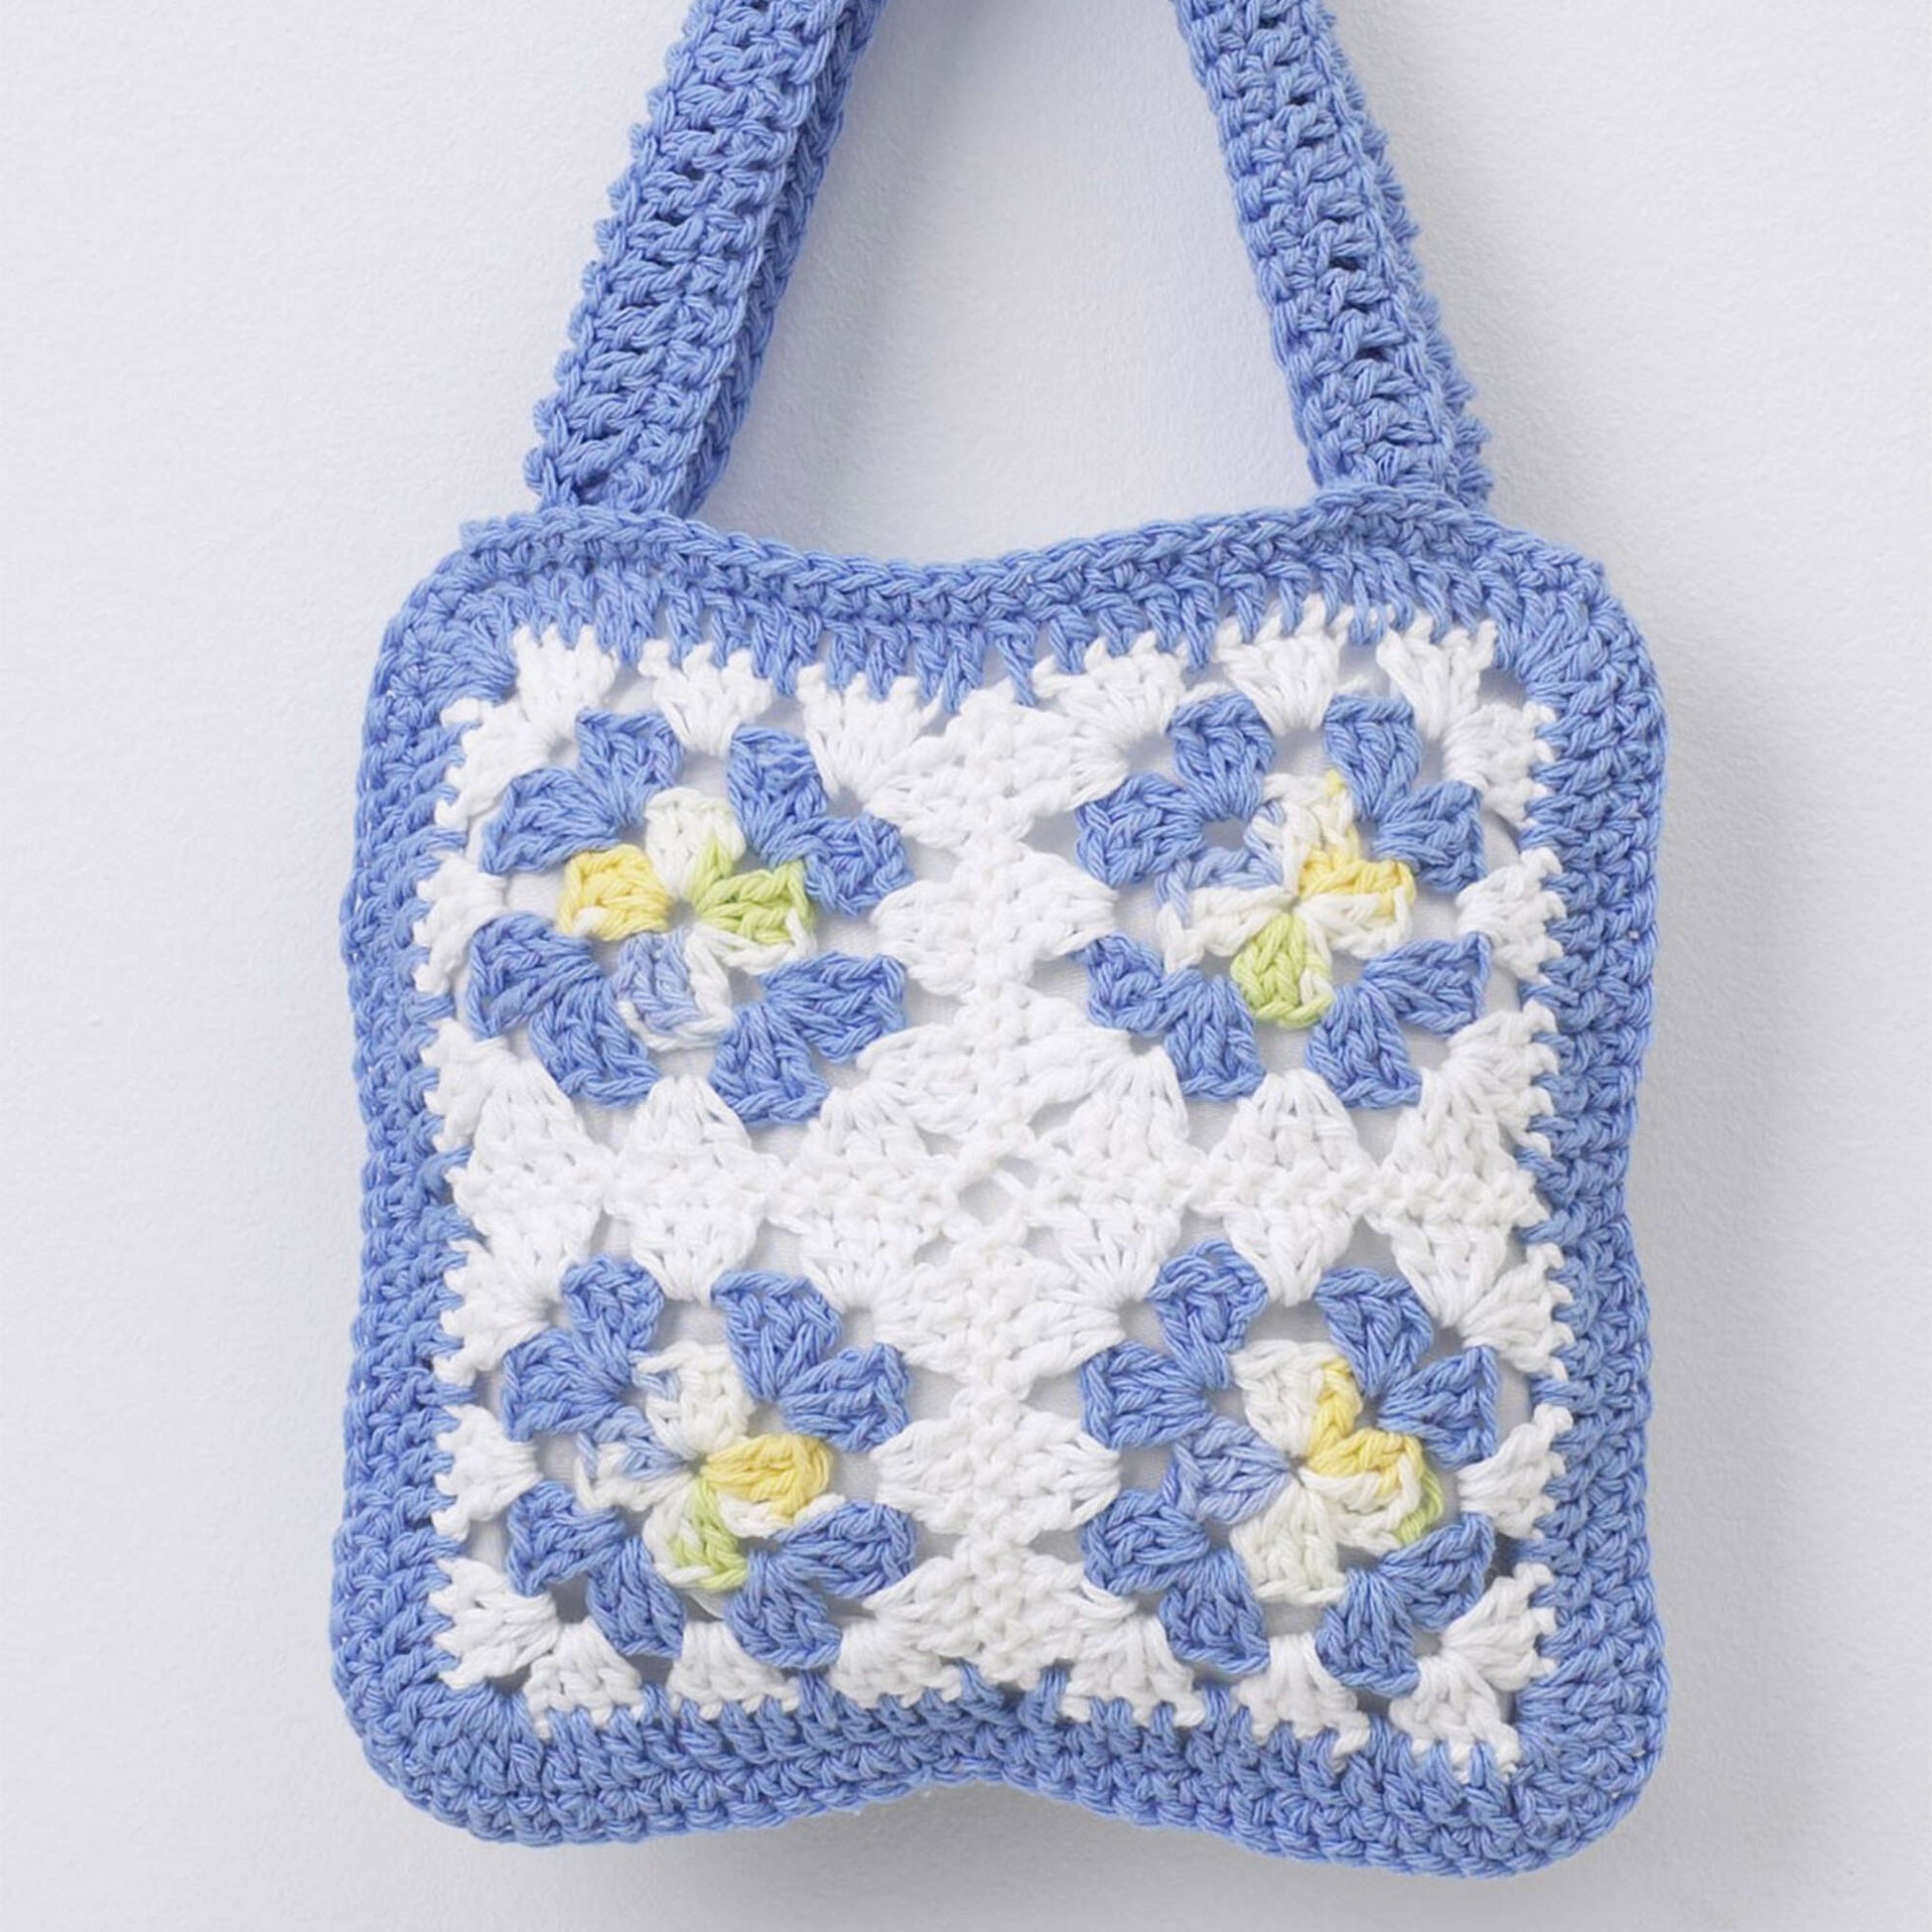 Free Bernat Granny Square Bag Crochet Pattern